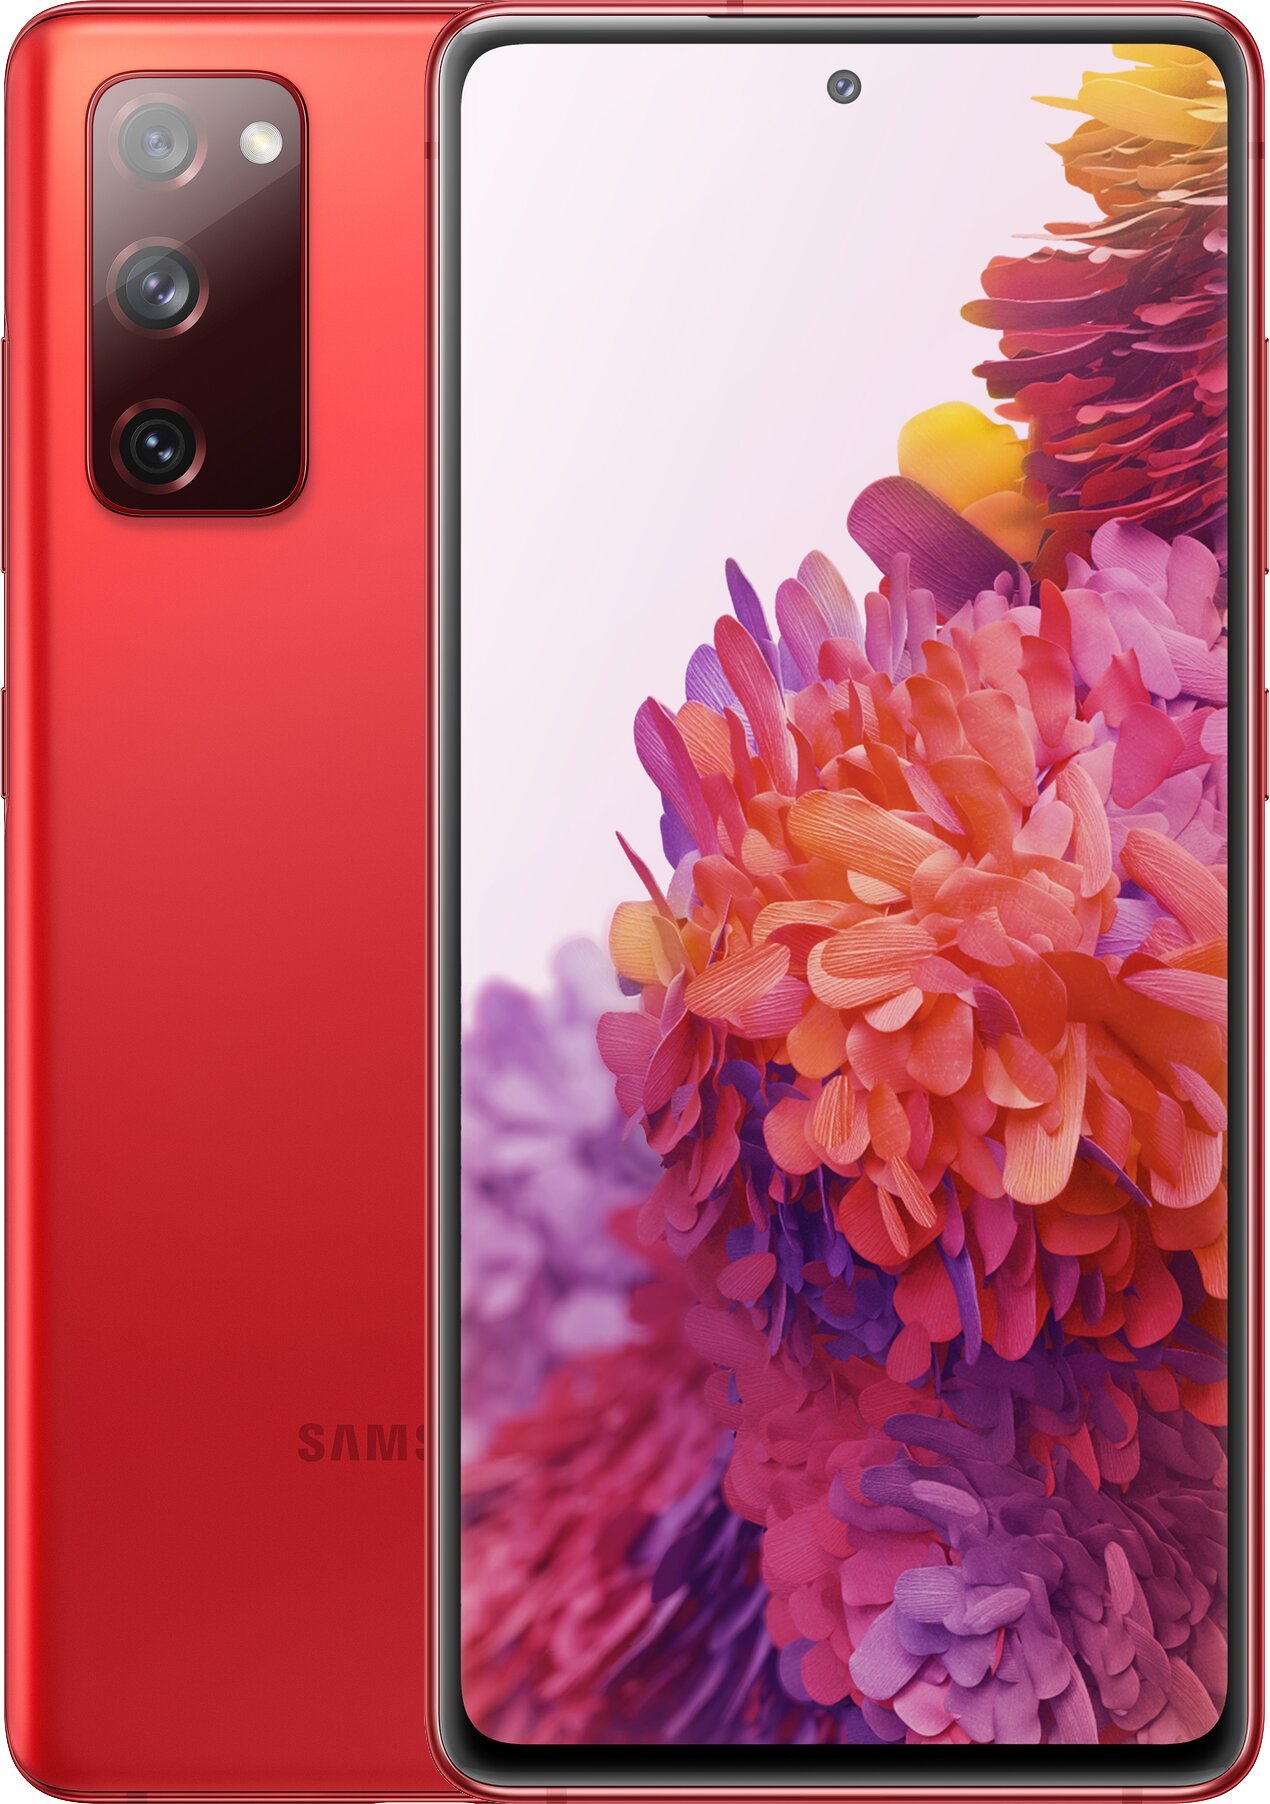 Samsung Galaxy S20 FE red Snapdragon